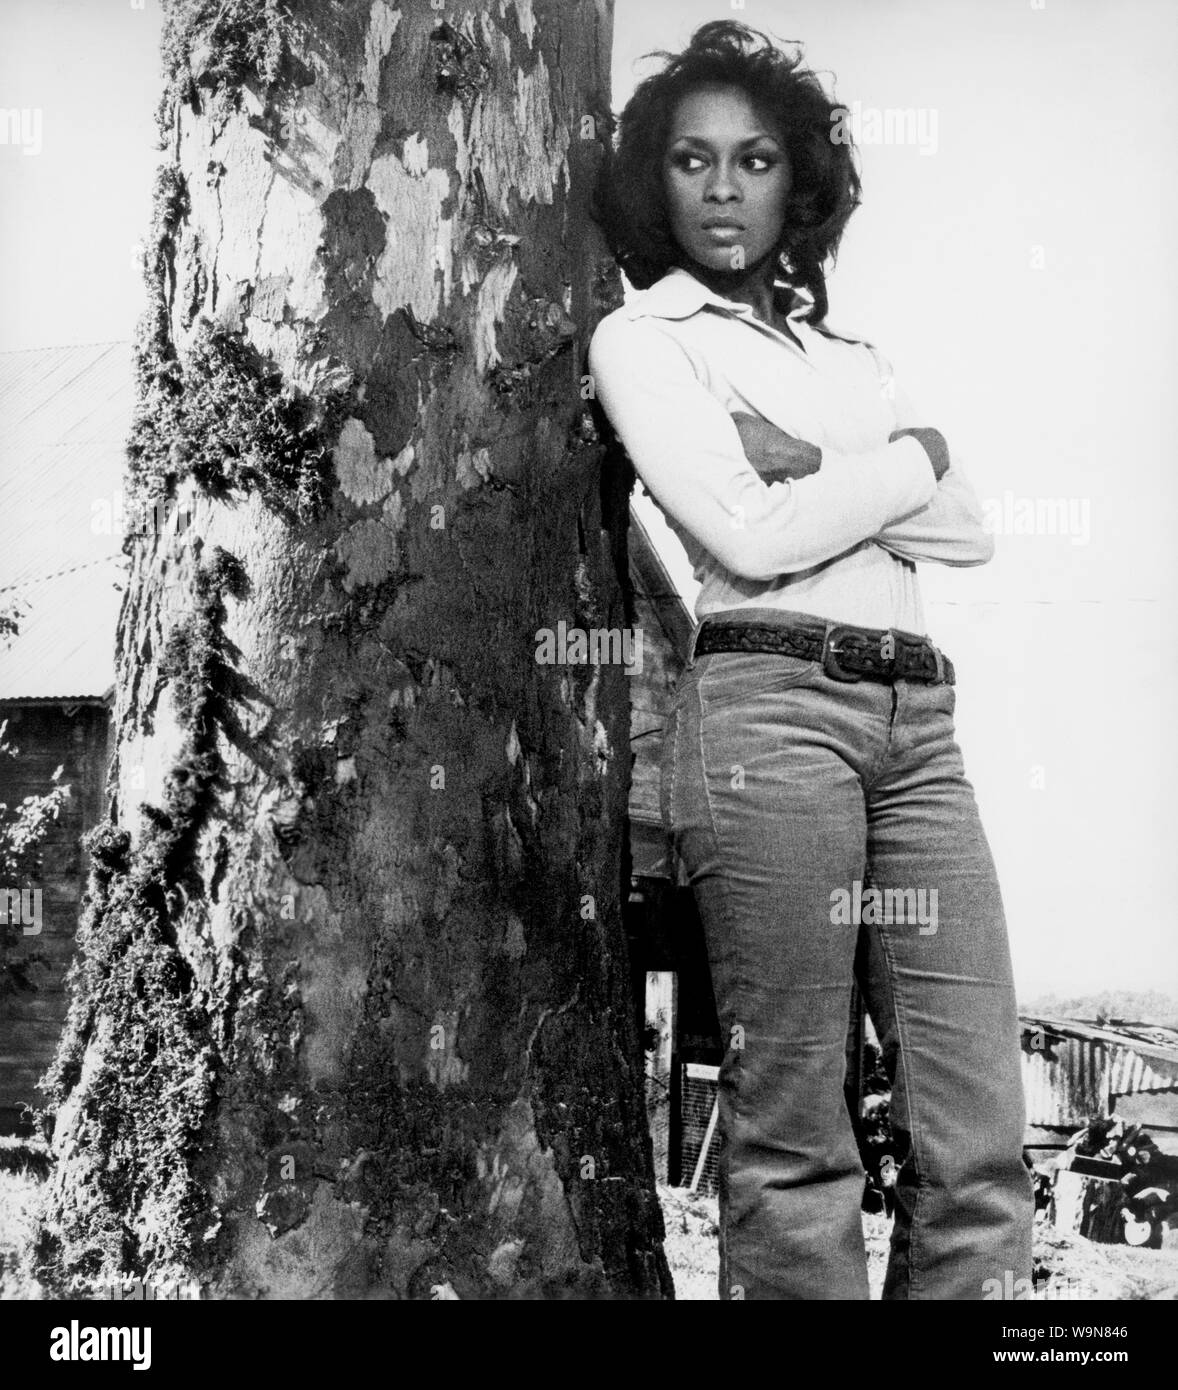 Lola Falana, auf - der Film", die "Klansman, Paramount Pictures, 1974 Stockfoto